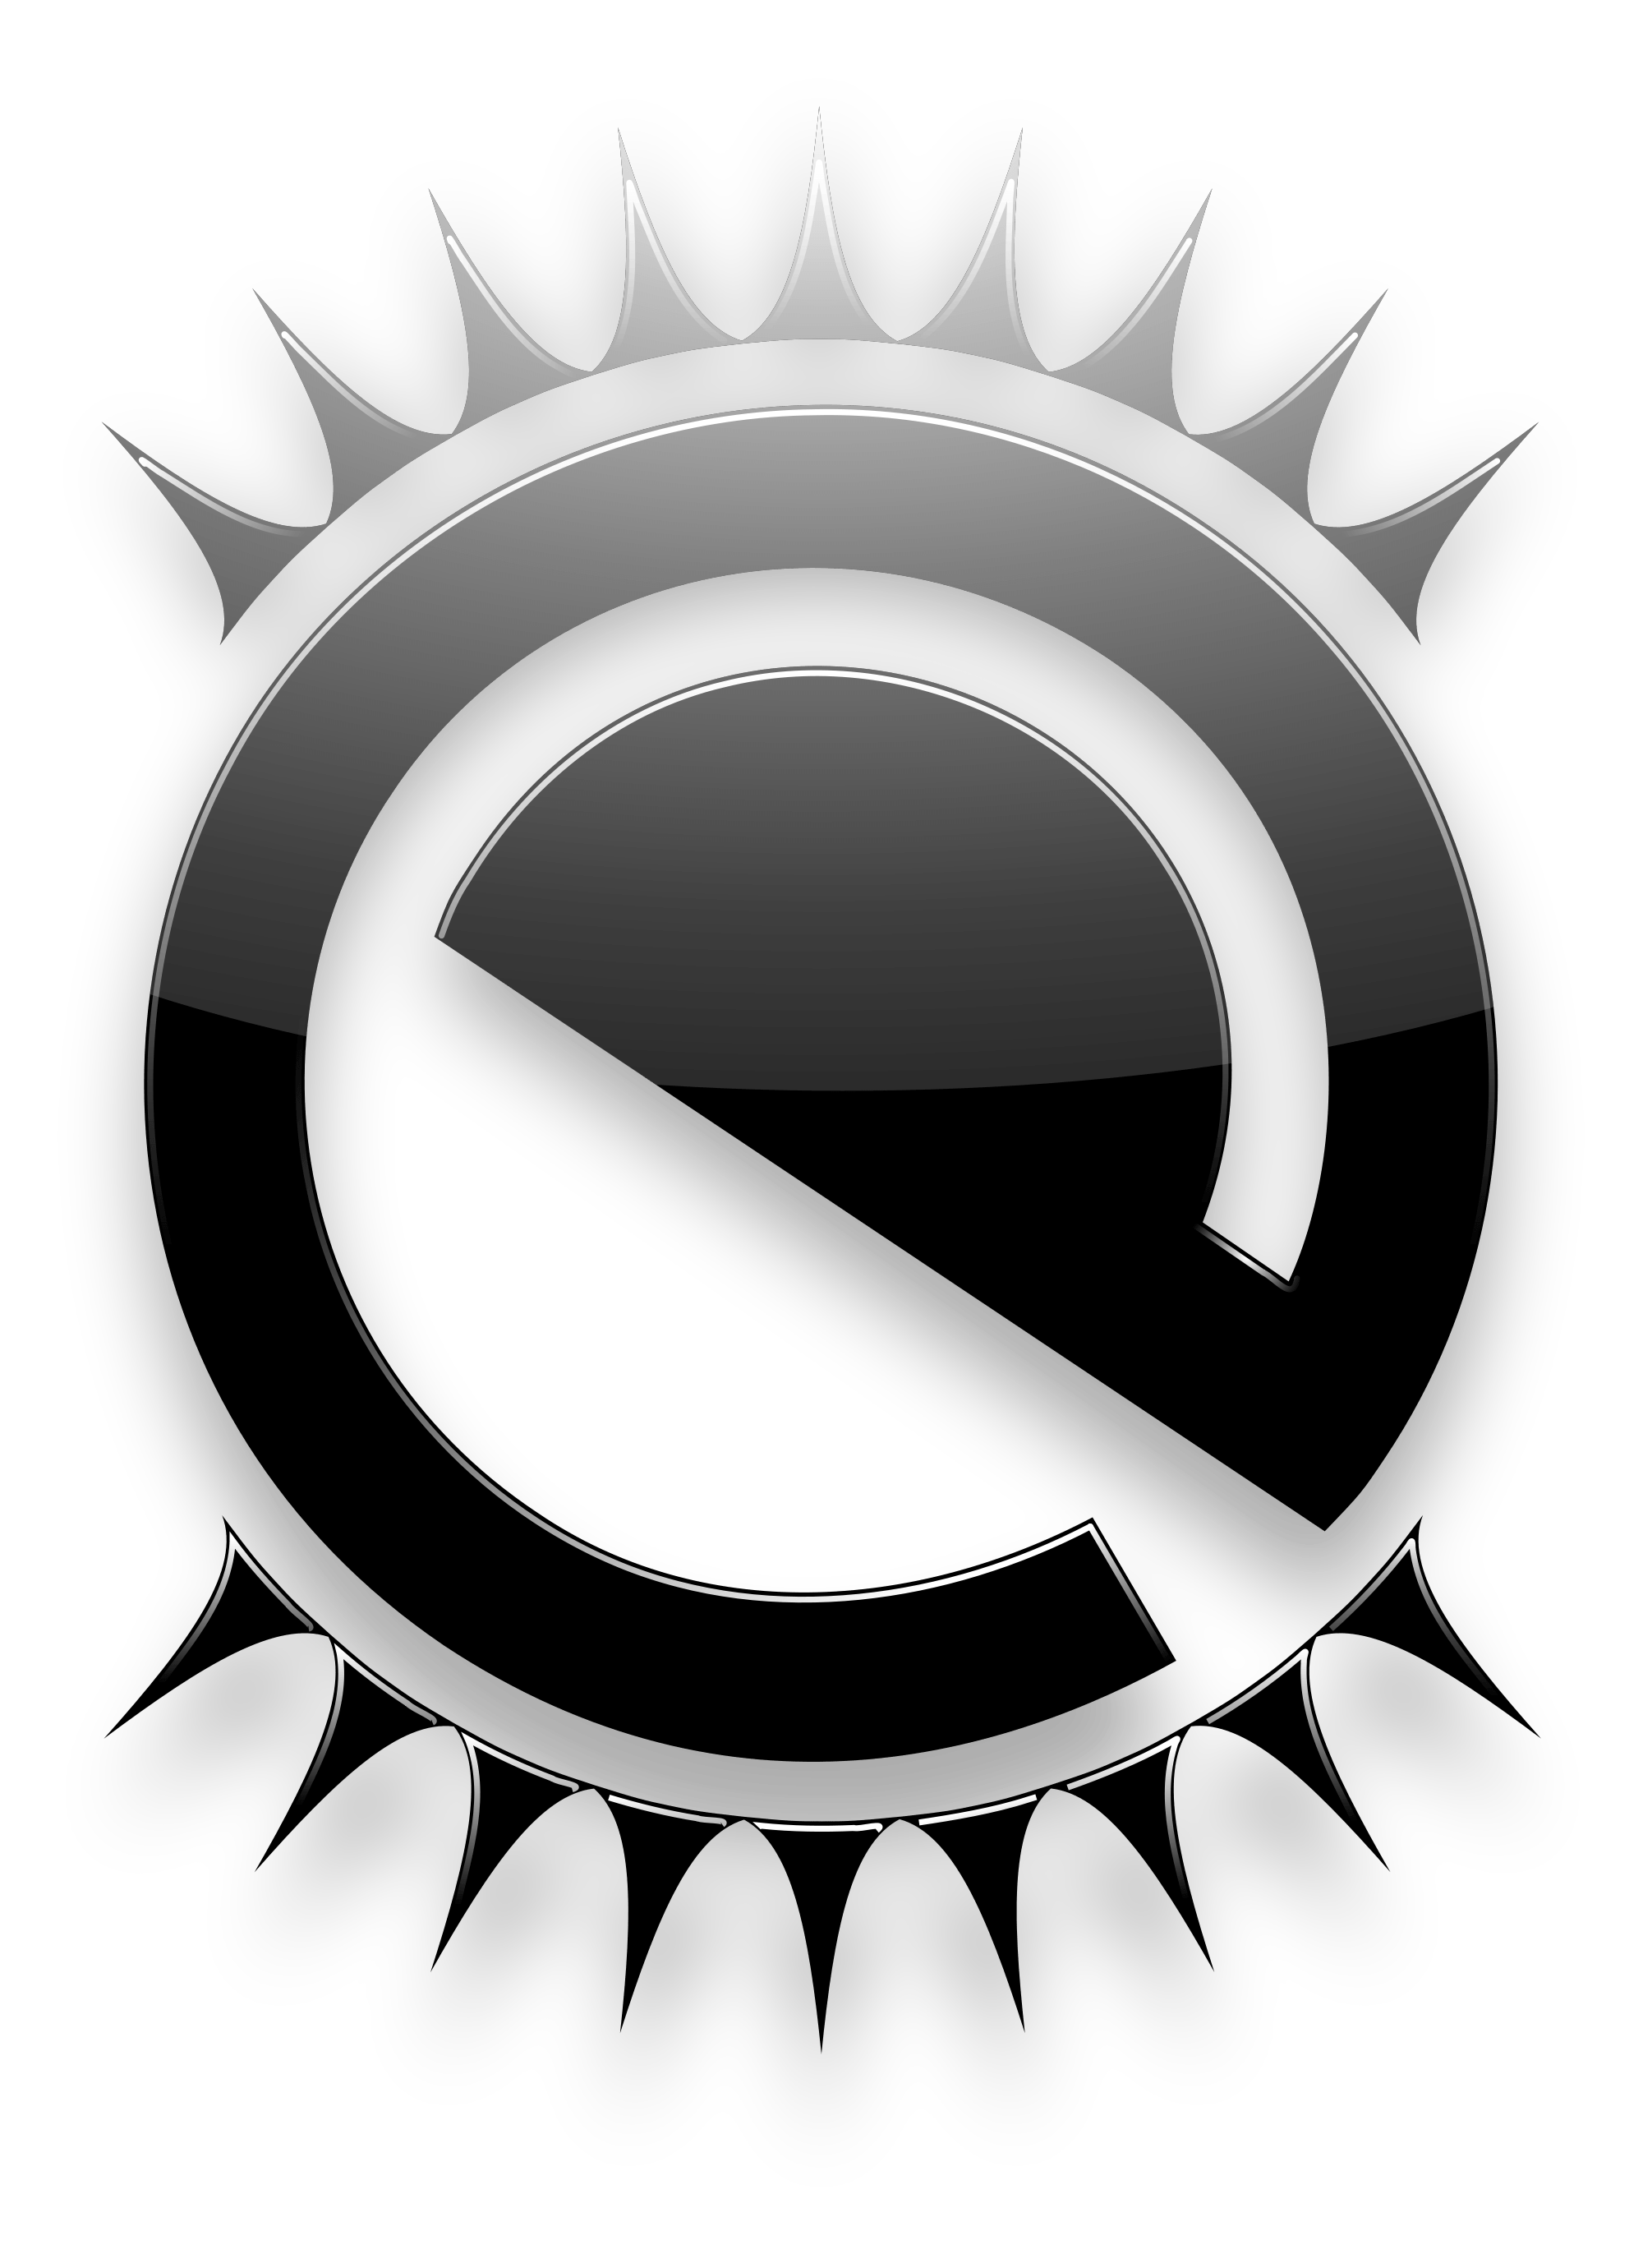 Enlightenment Logo - File:E17 enlightenment logo shiny black curved.svg - Wikimedia Commons